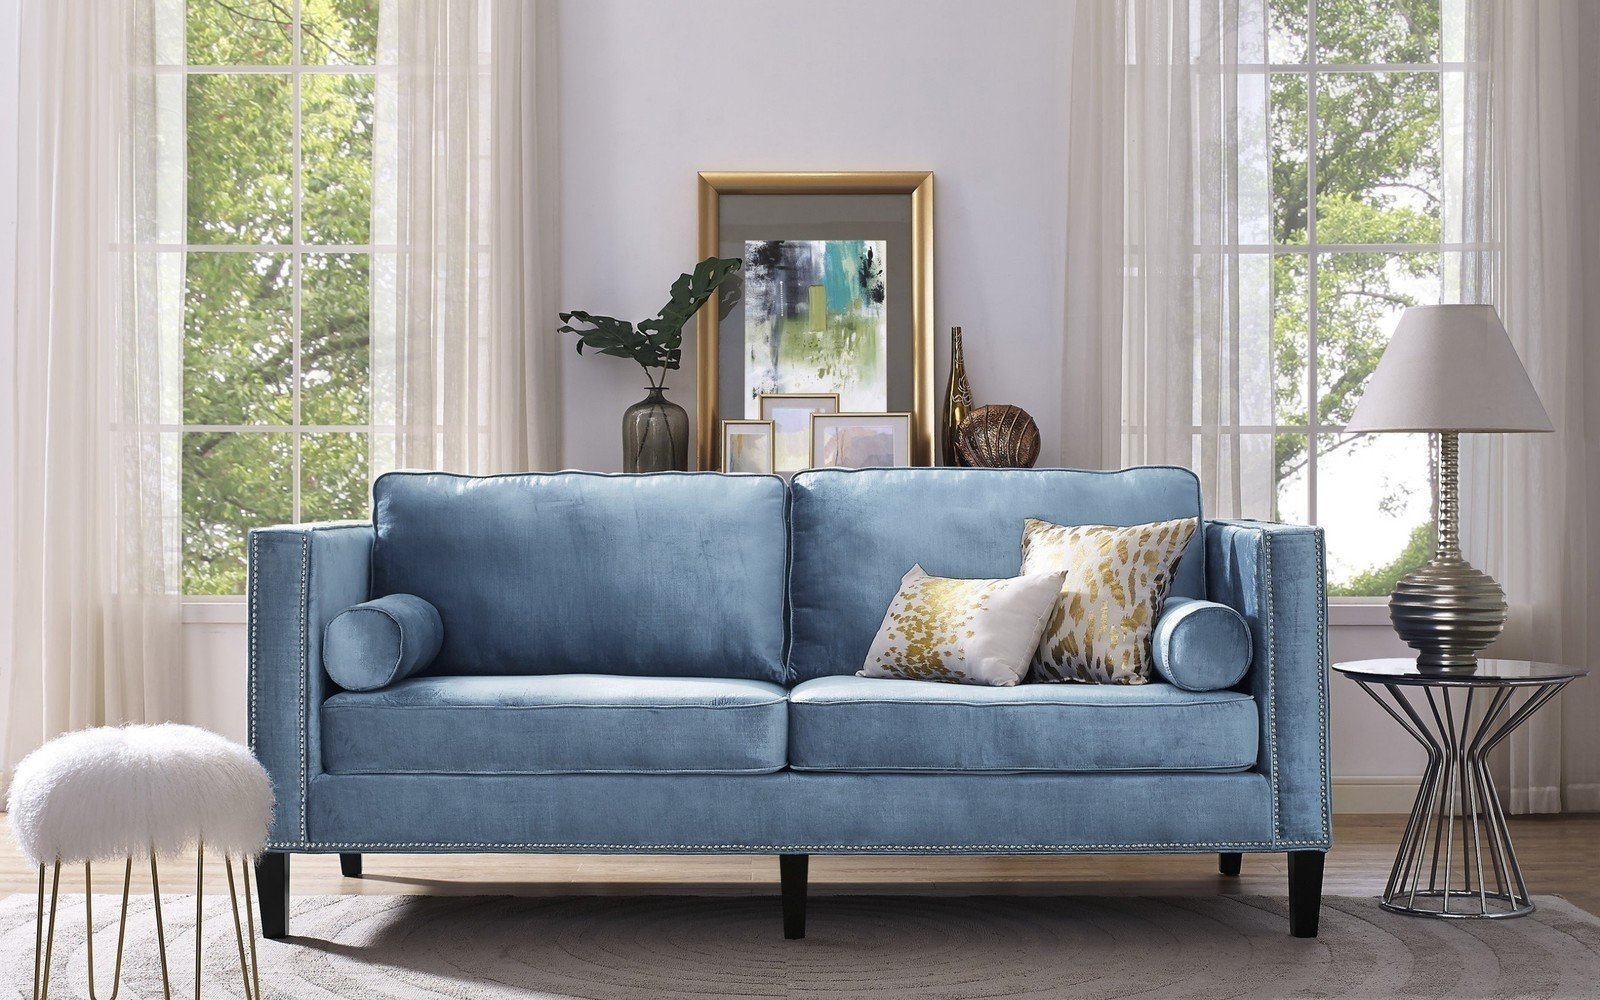 Tov furniture cooper blue velvet sofa